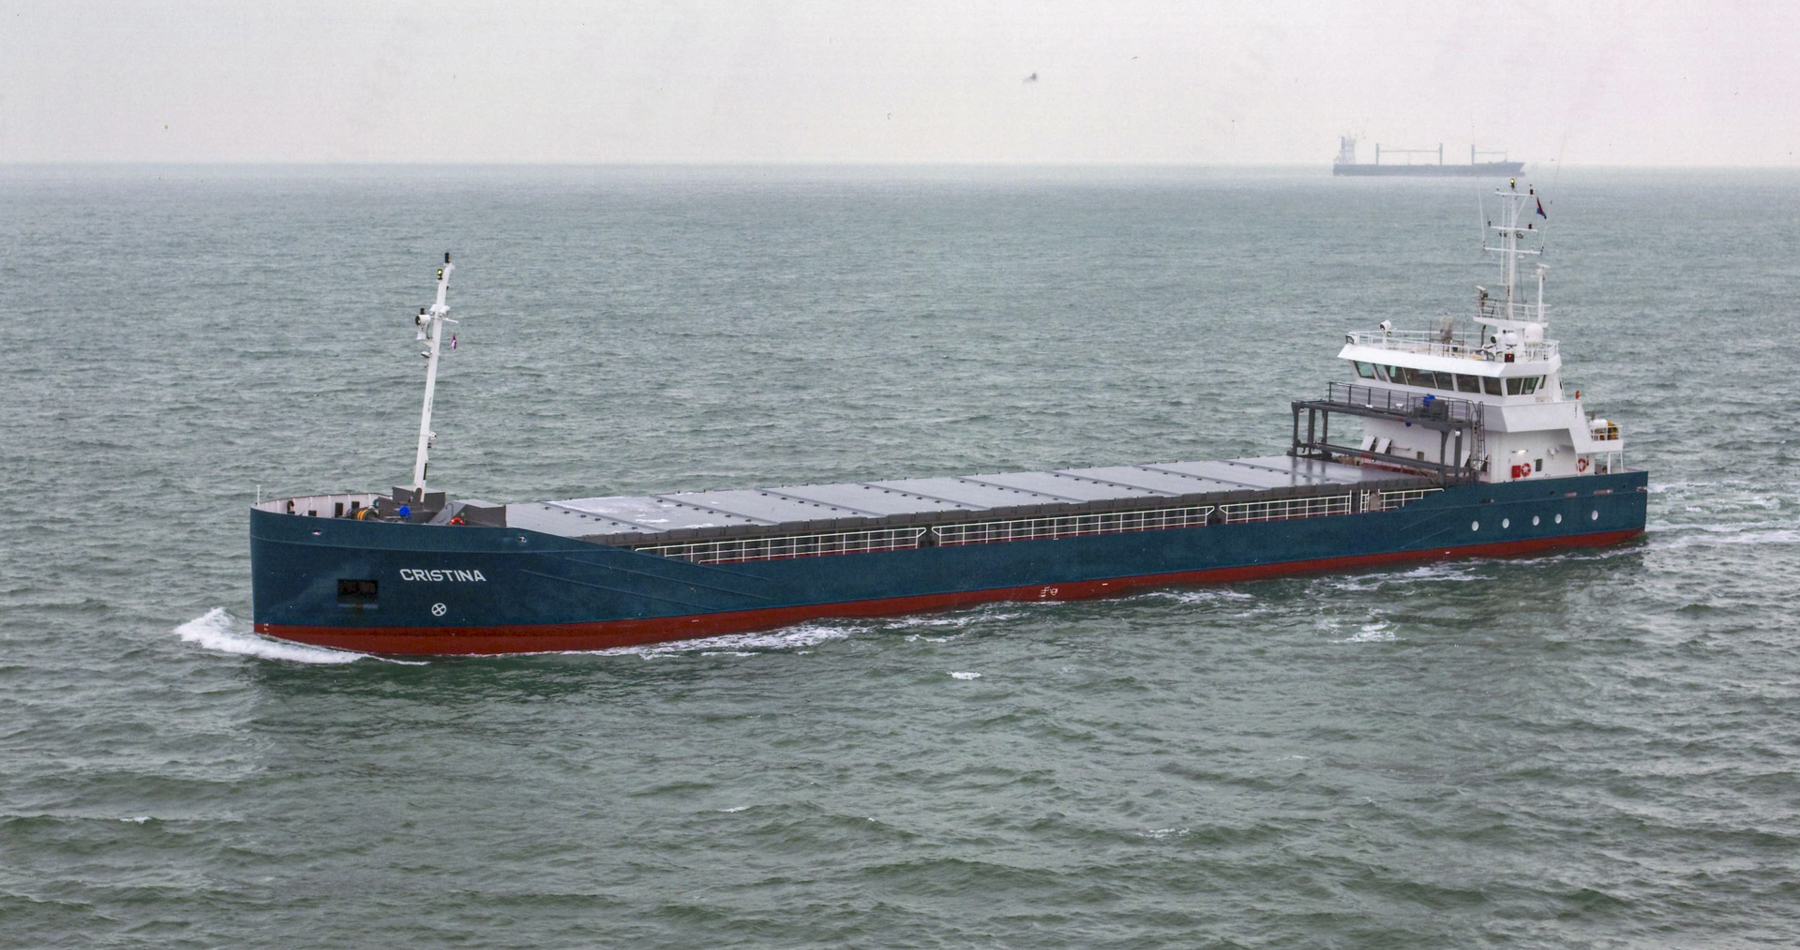 MV Christina ships project cargo to Copenhagen